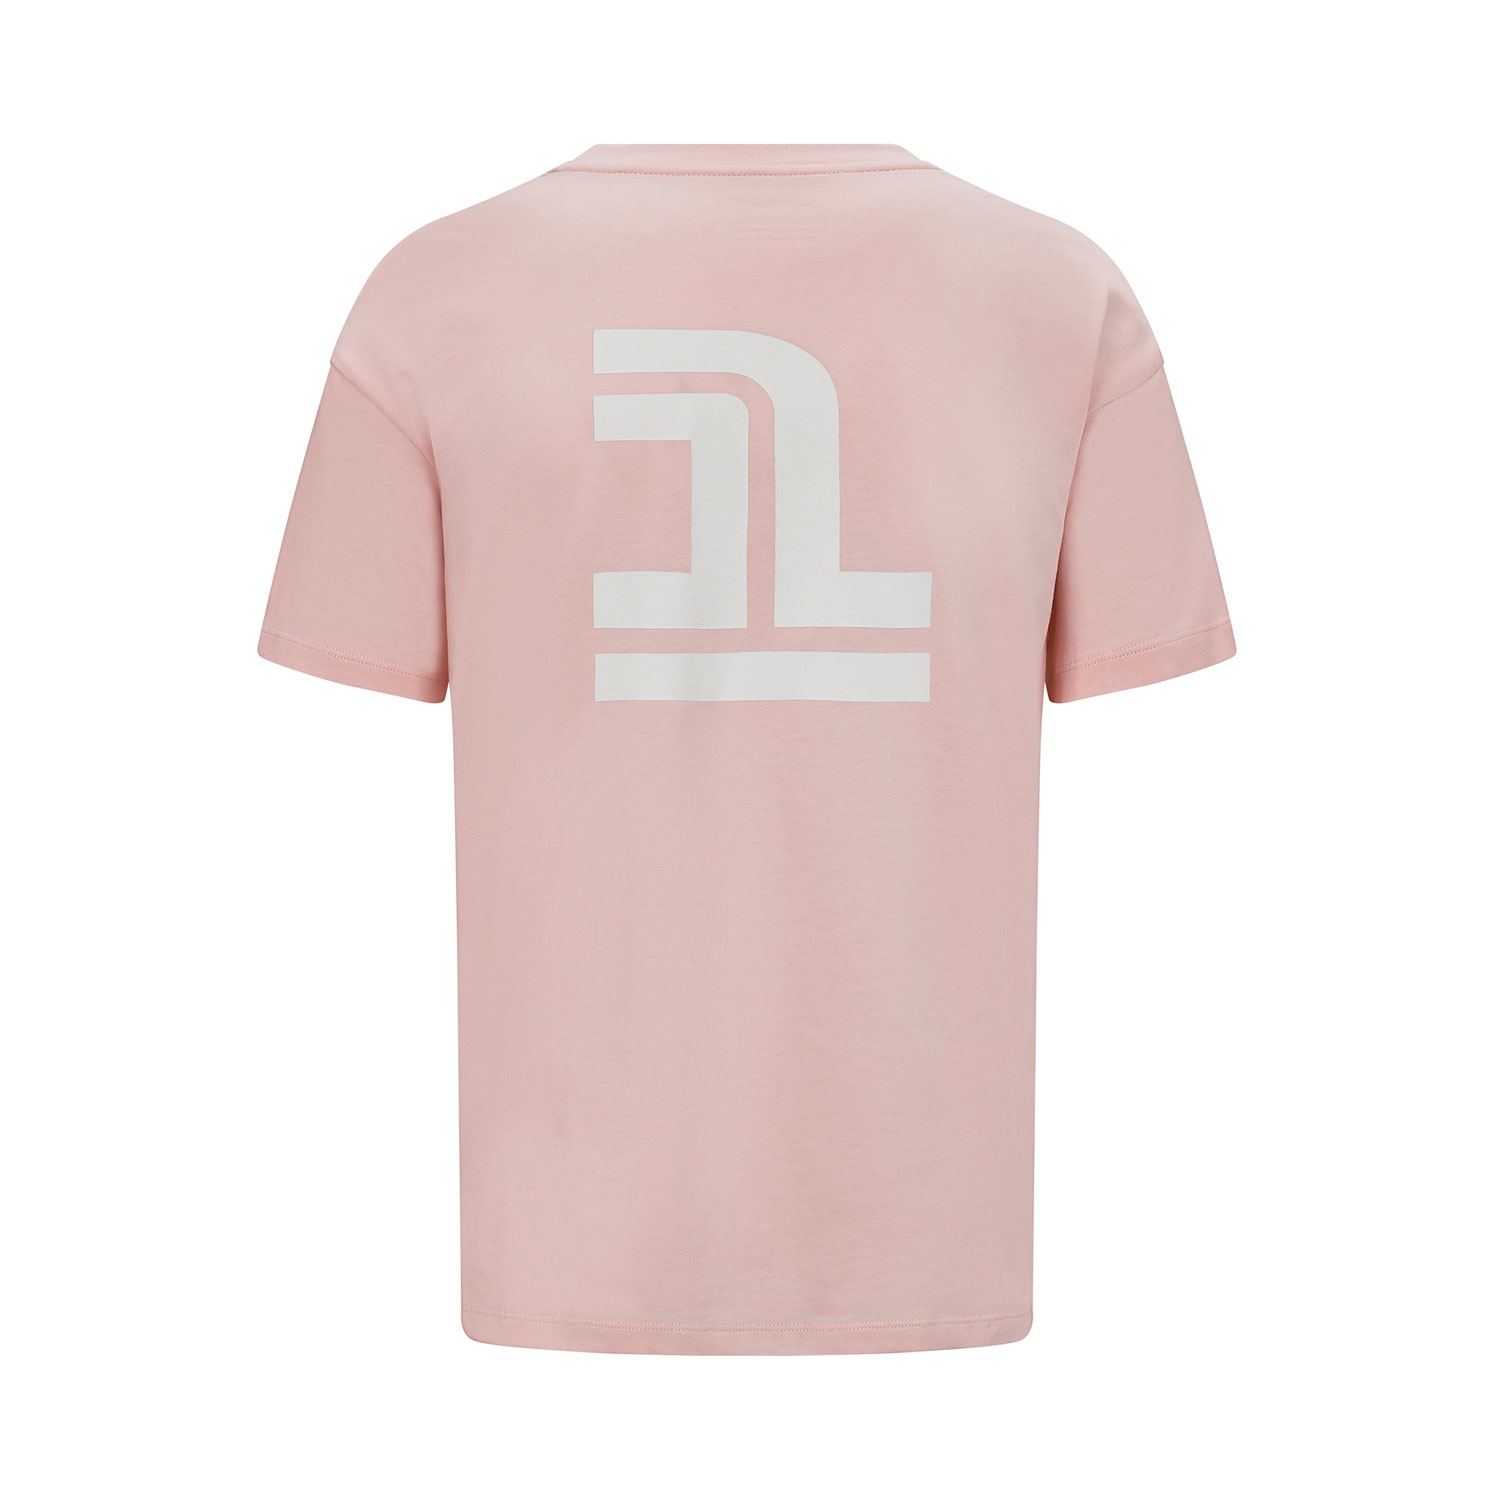 Formula 1 Tech Pastel T-Shirt - Pink/Blue/Purple, Women's, Size: 2XL